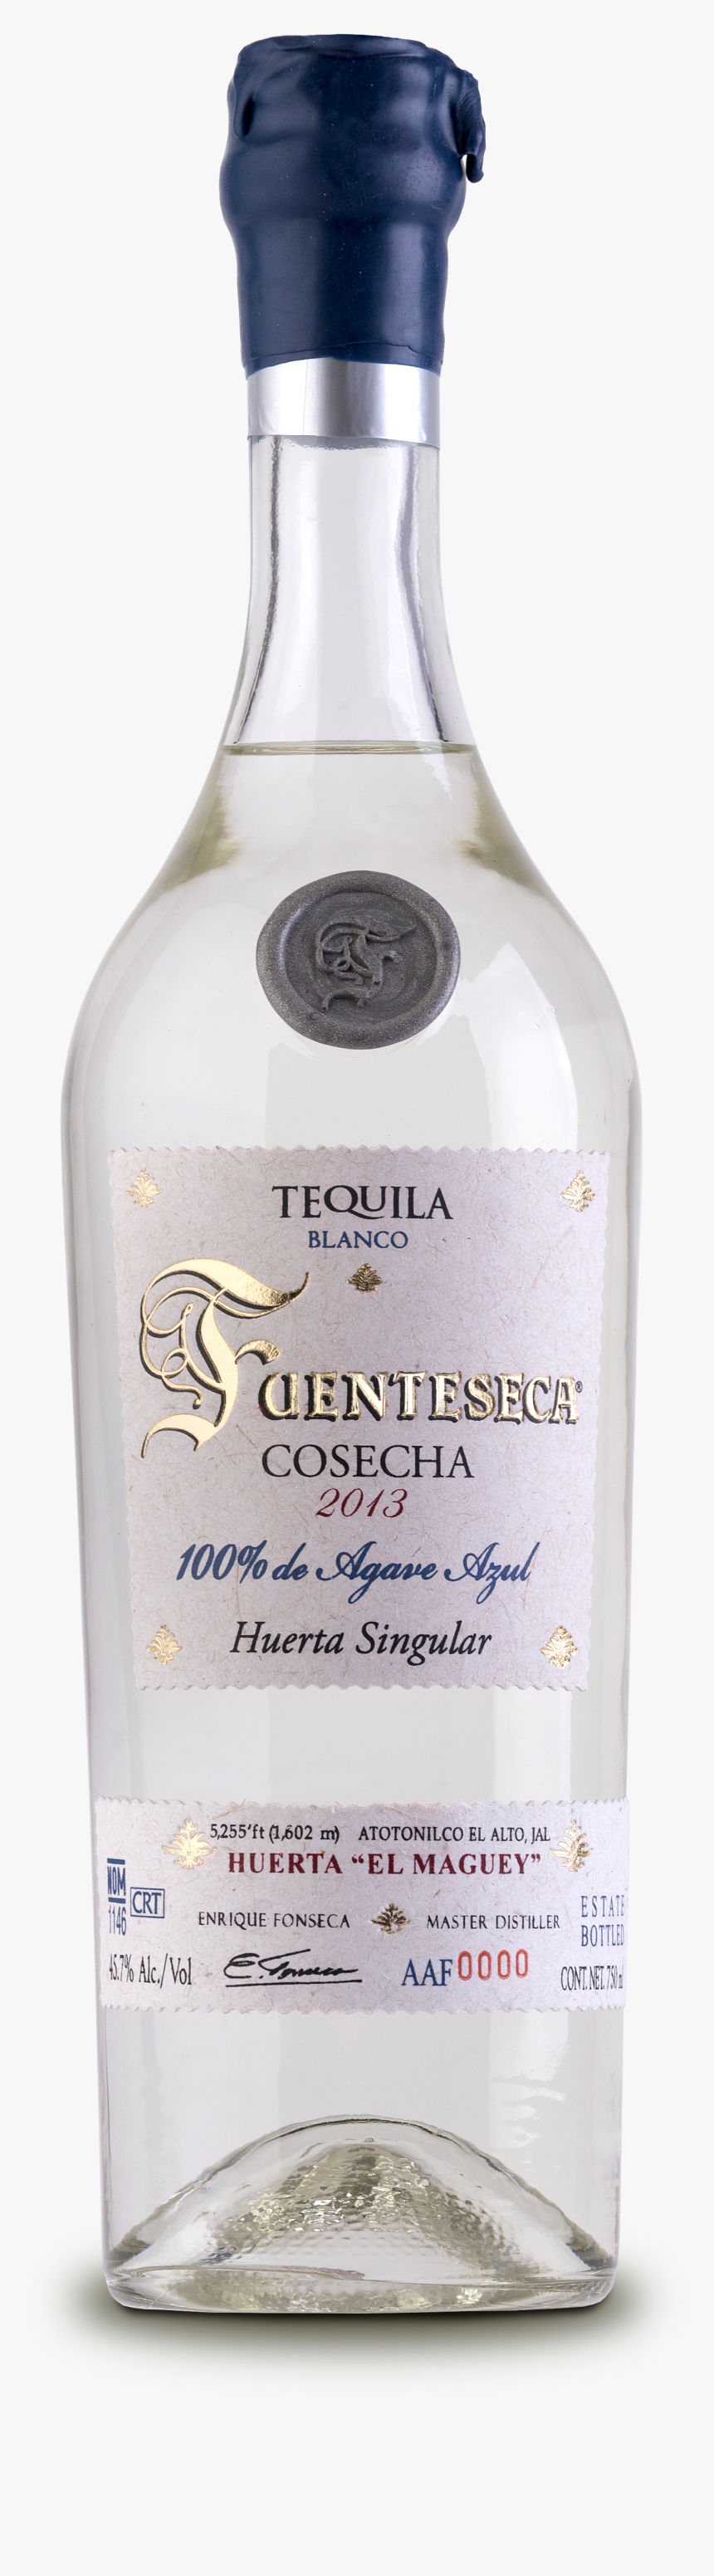 Tequila Png - Fuenteseca Cosecha